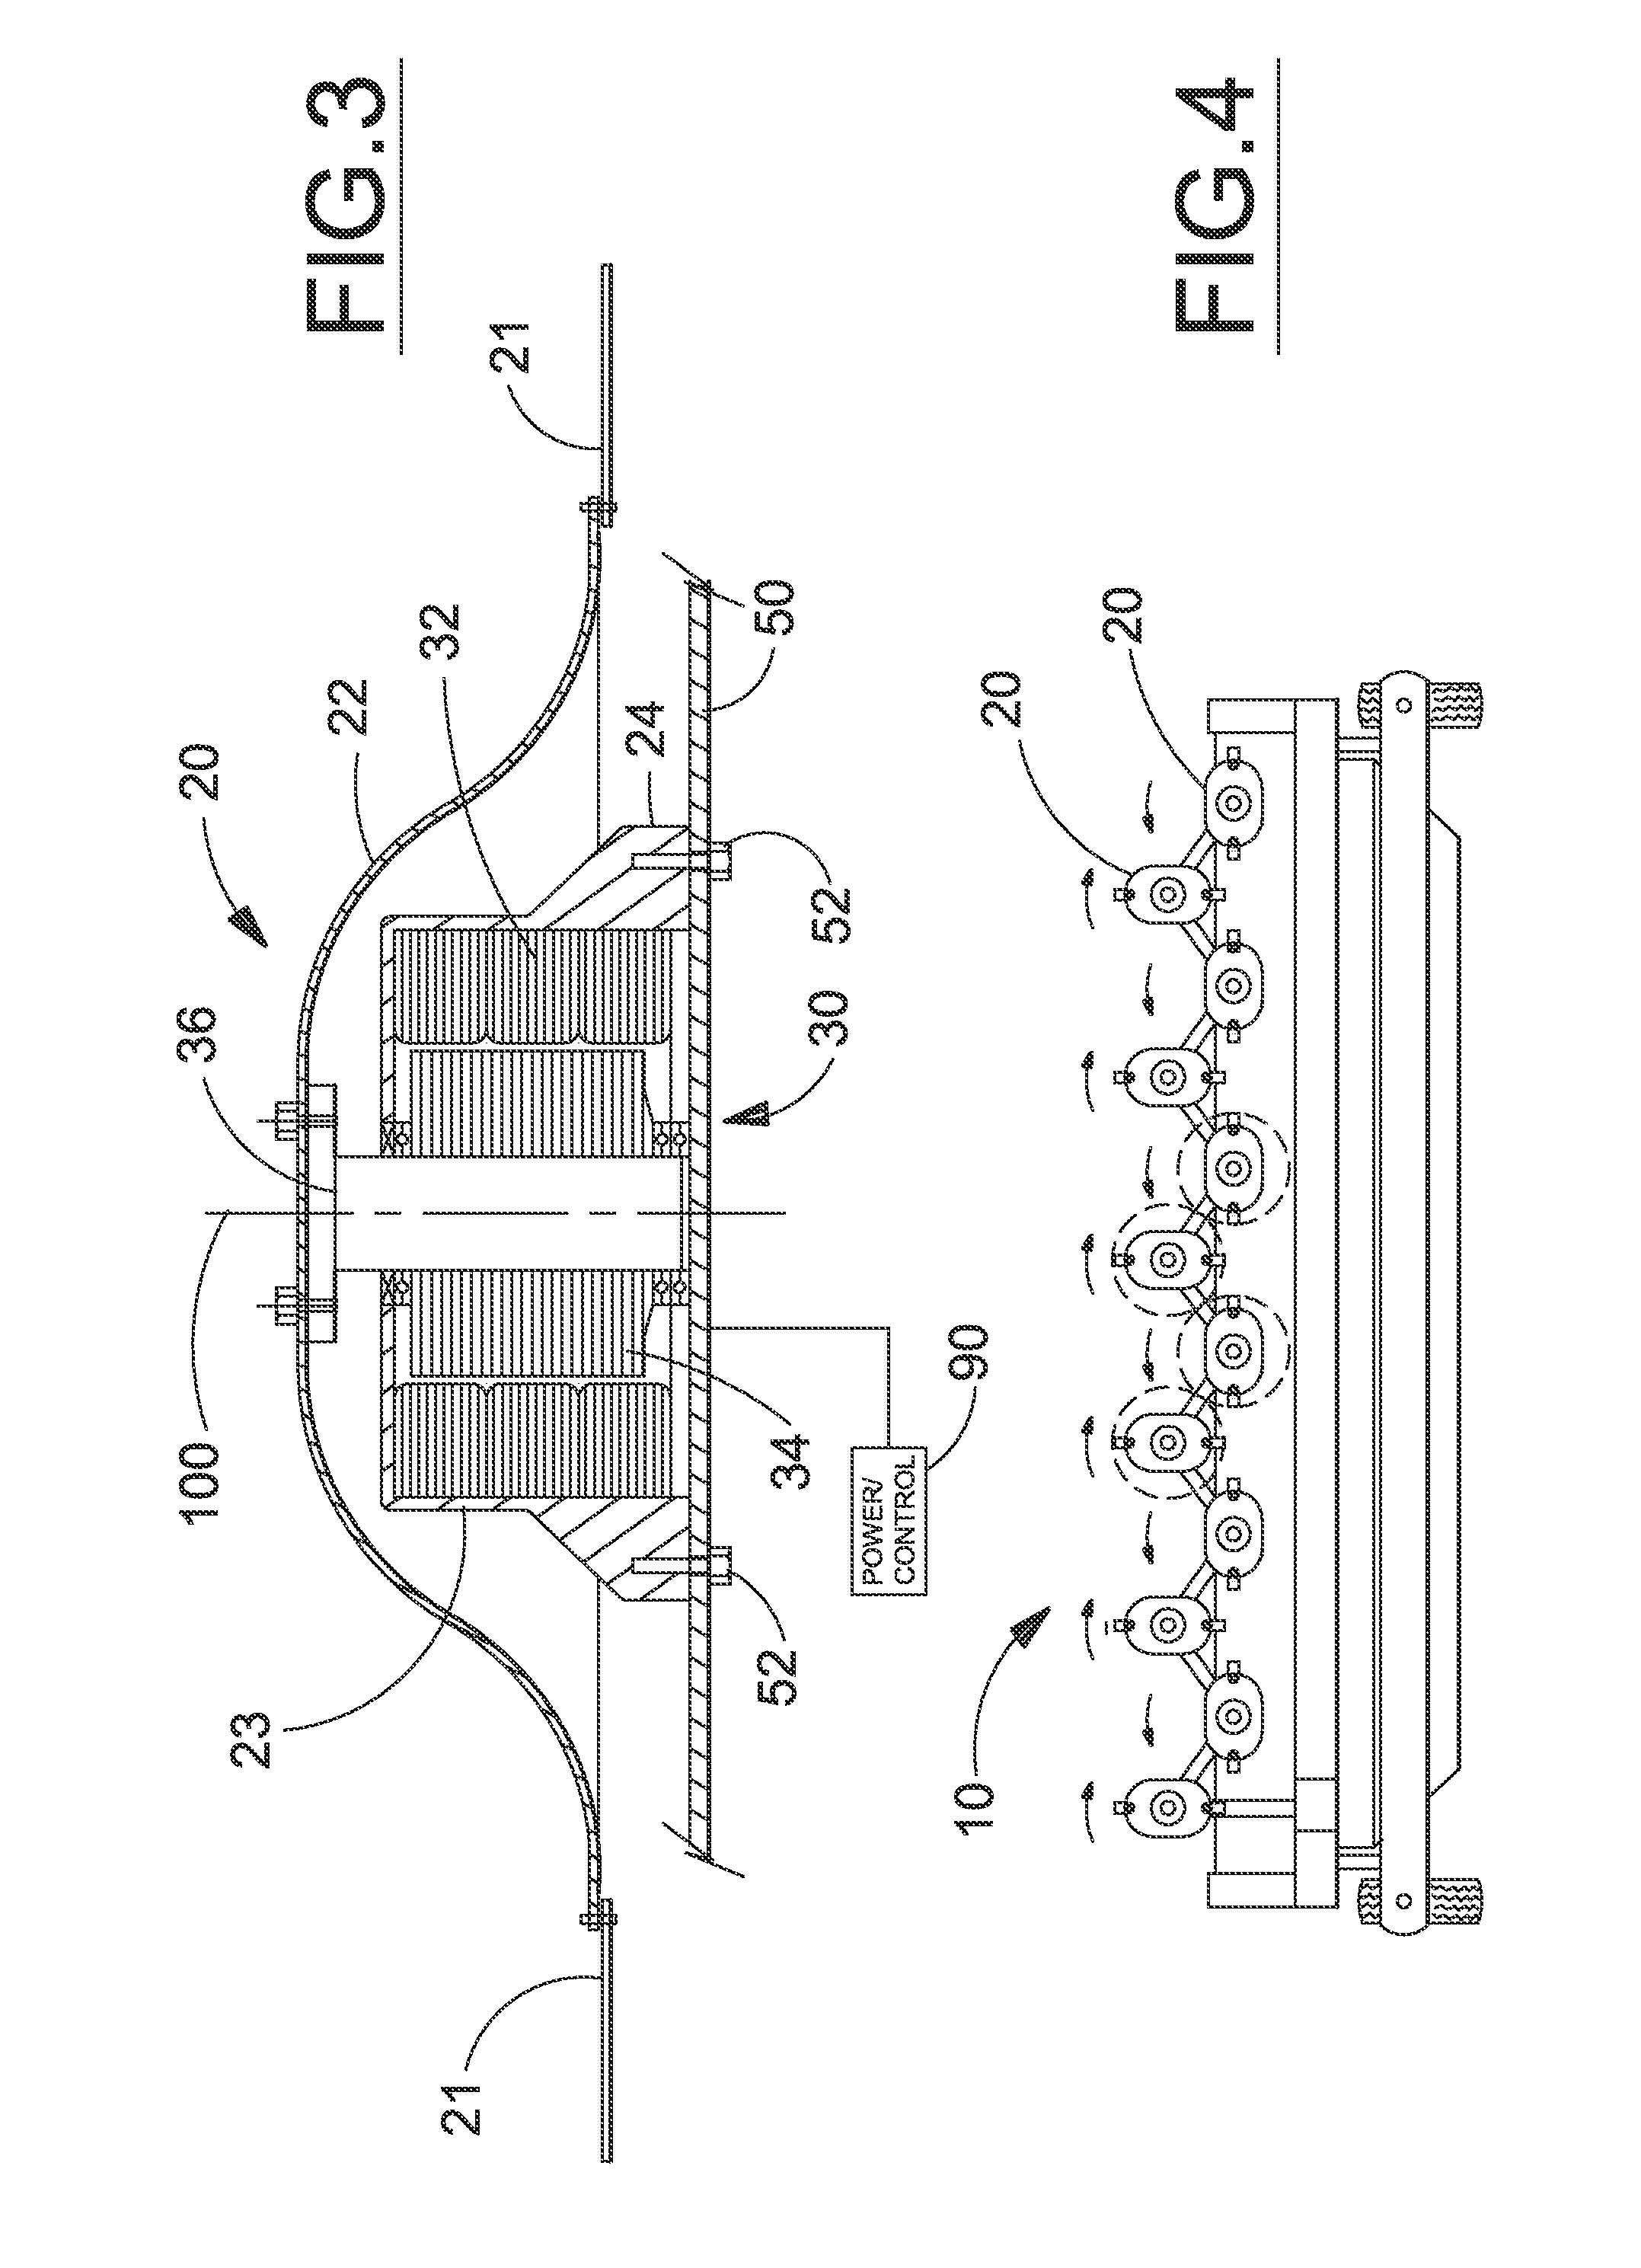 Modular electric disc cutterbar and controller